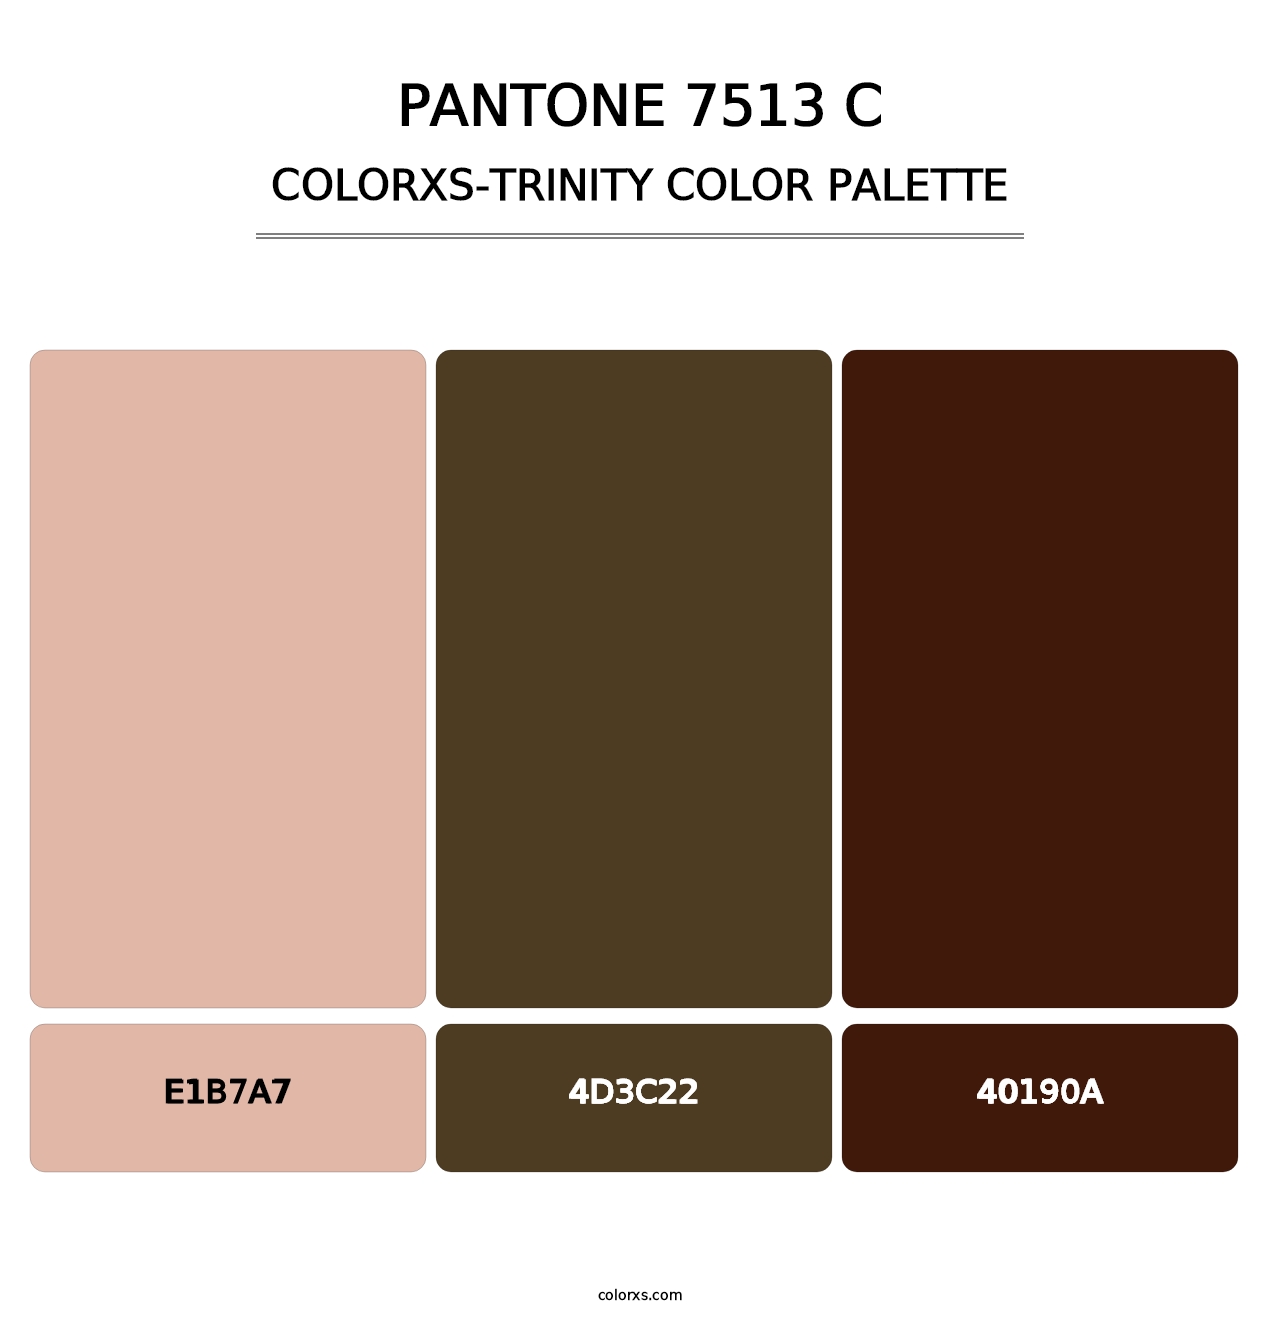 PANTONE 7513 C - Colorxs Trinity Palette